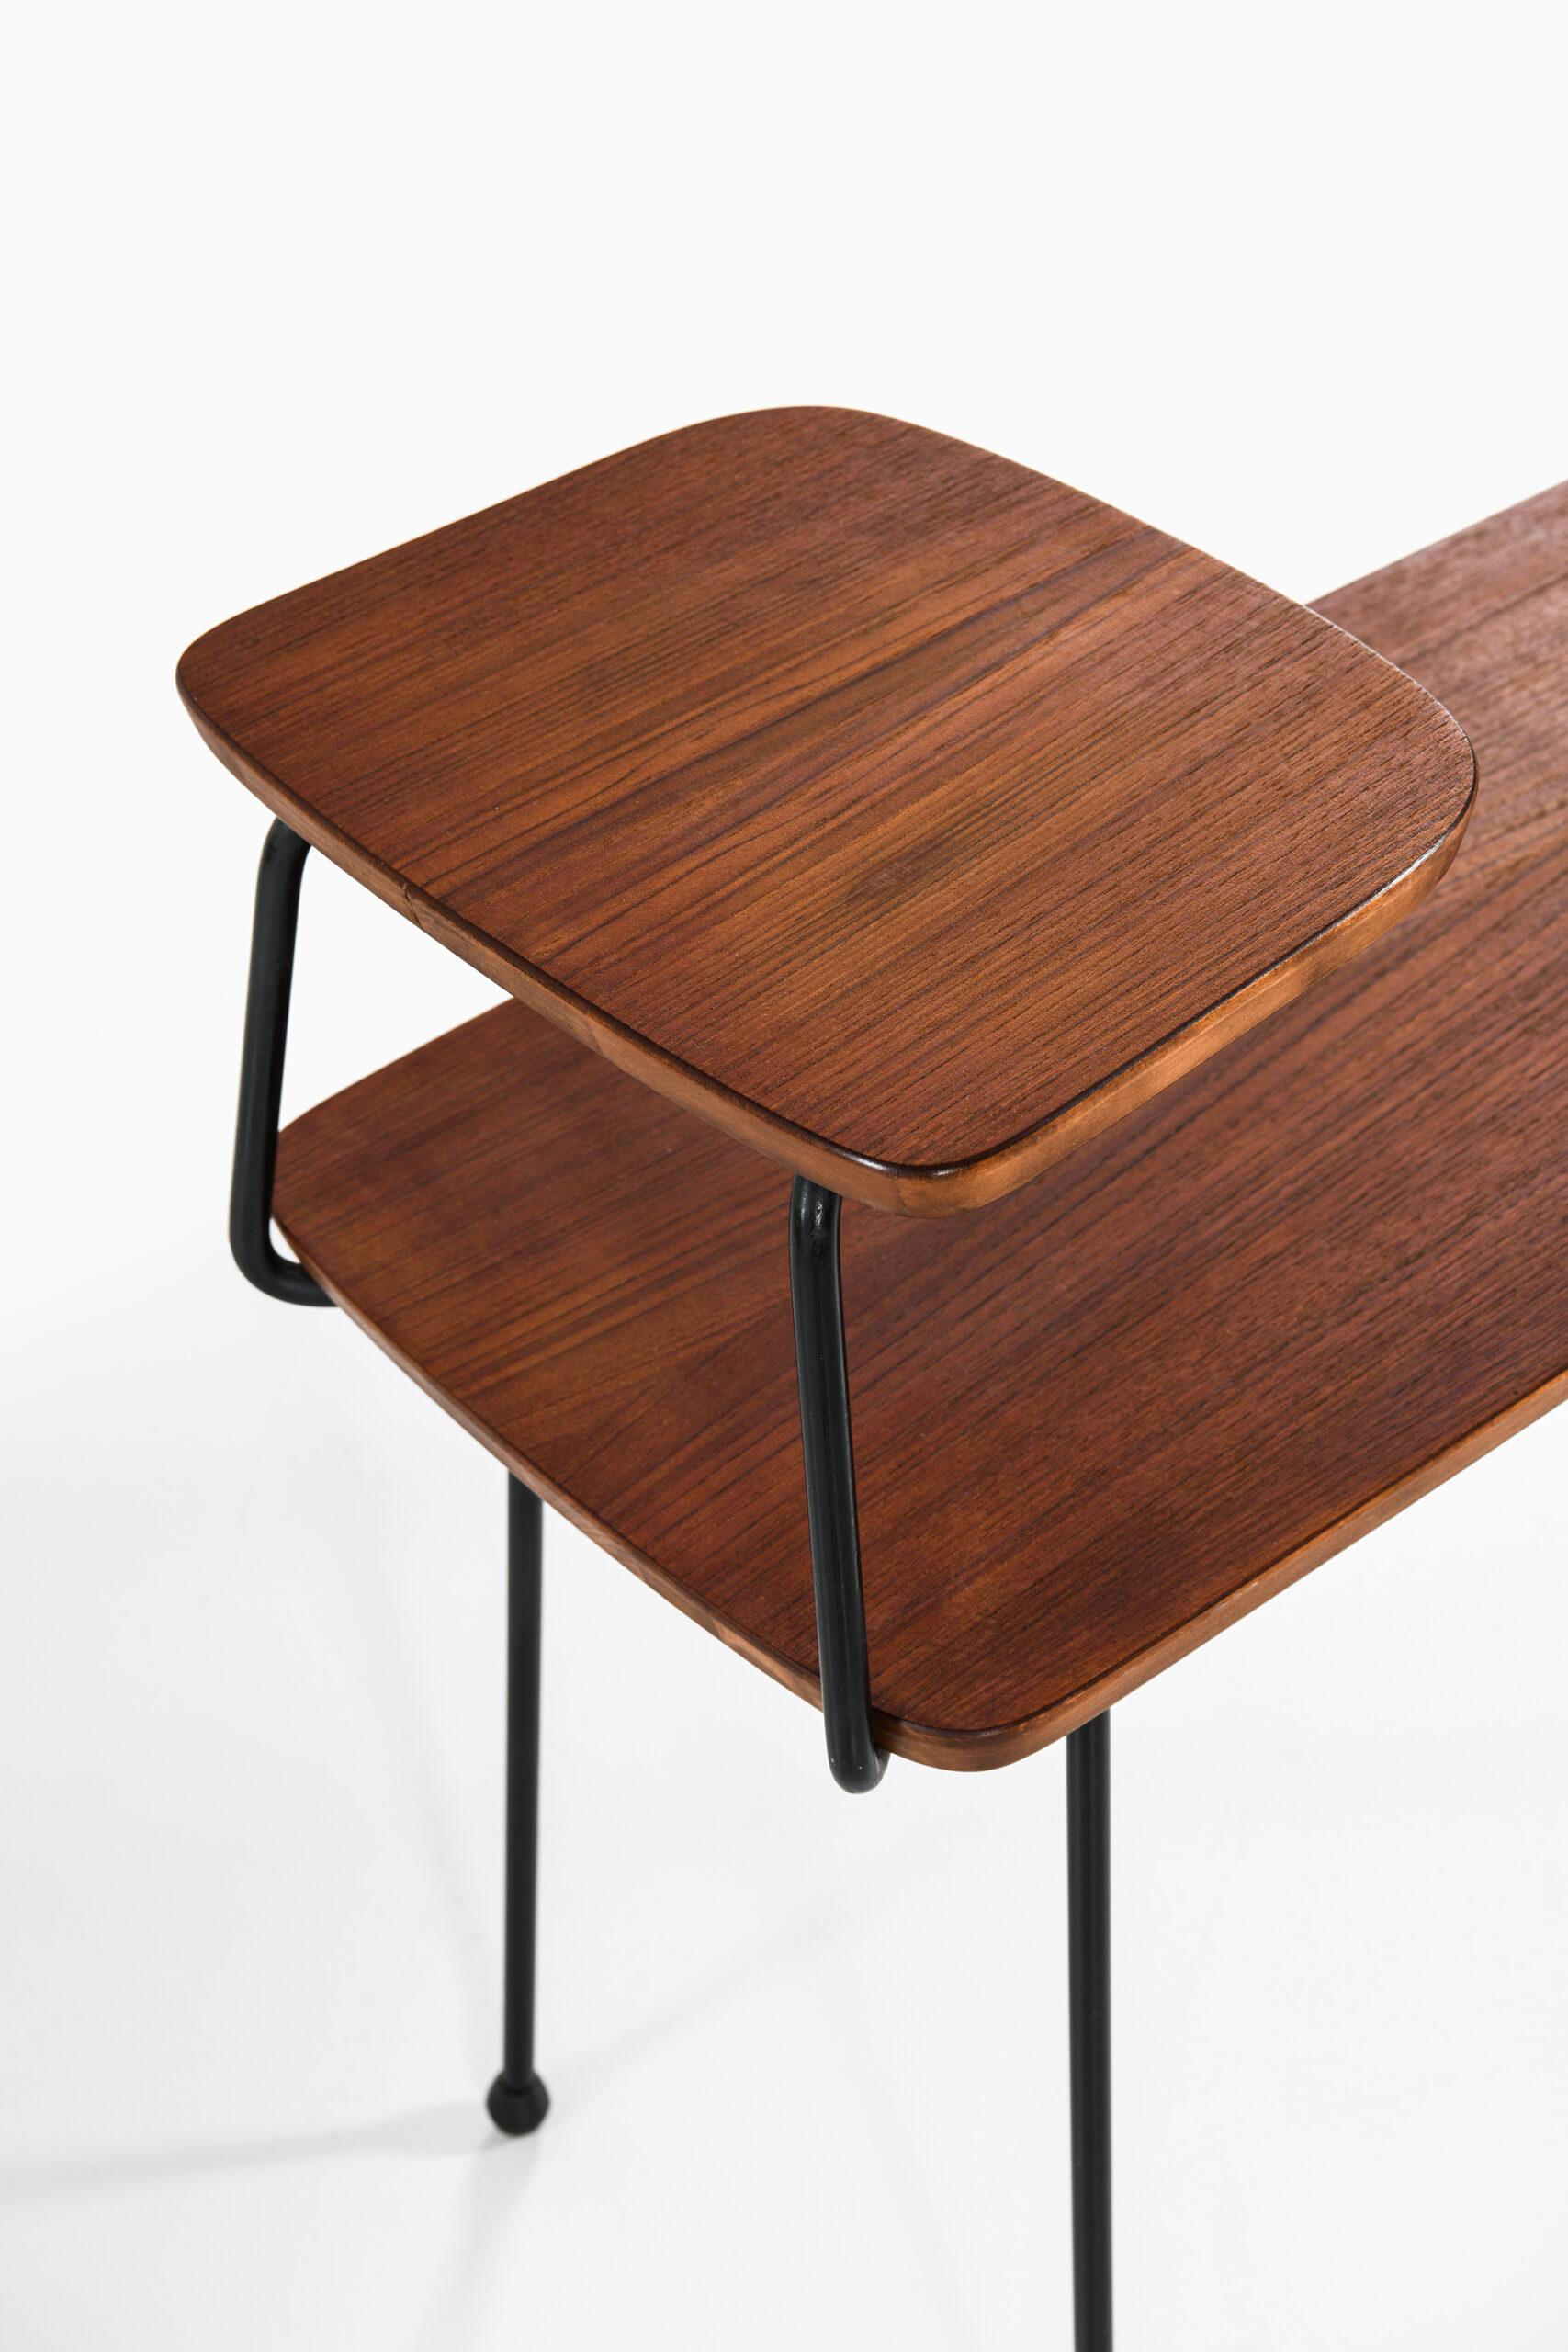 Scandinavian Modern Side Tables in the Style of Greta Magnusson Grossman